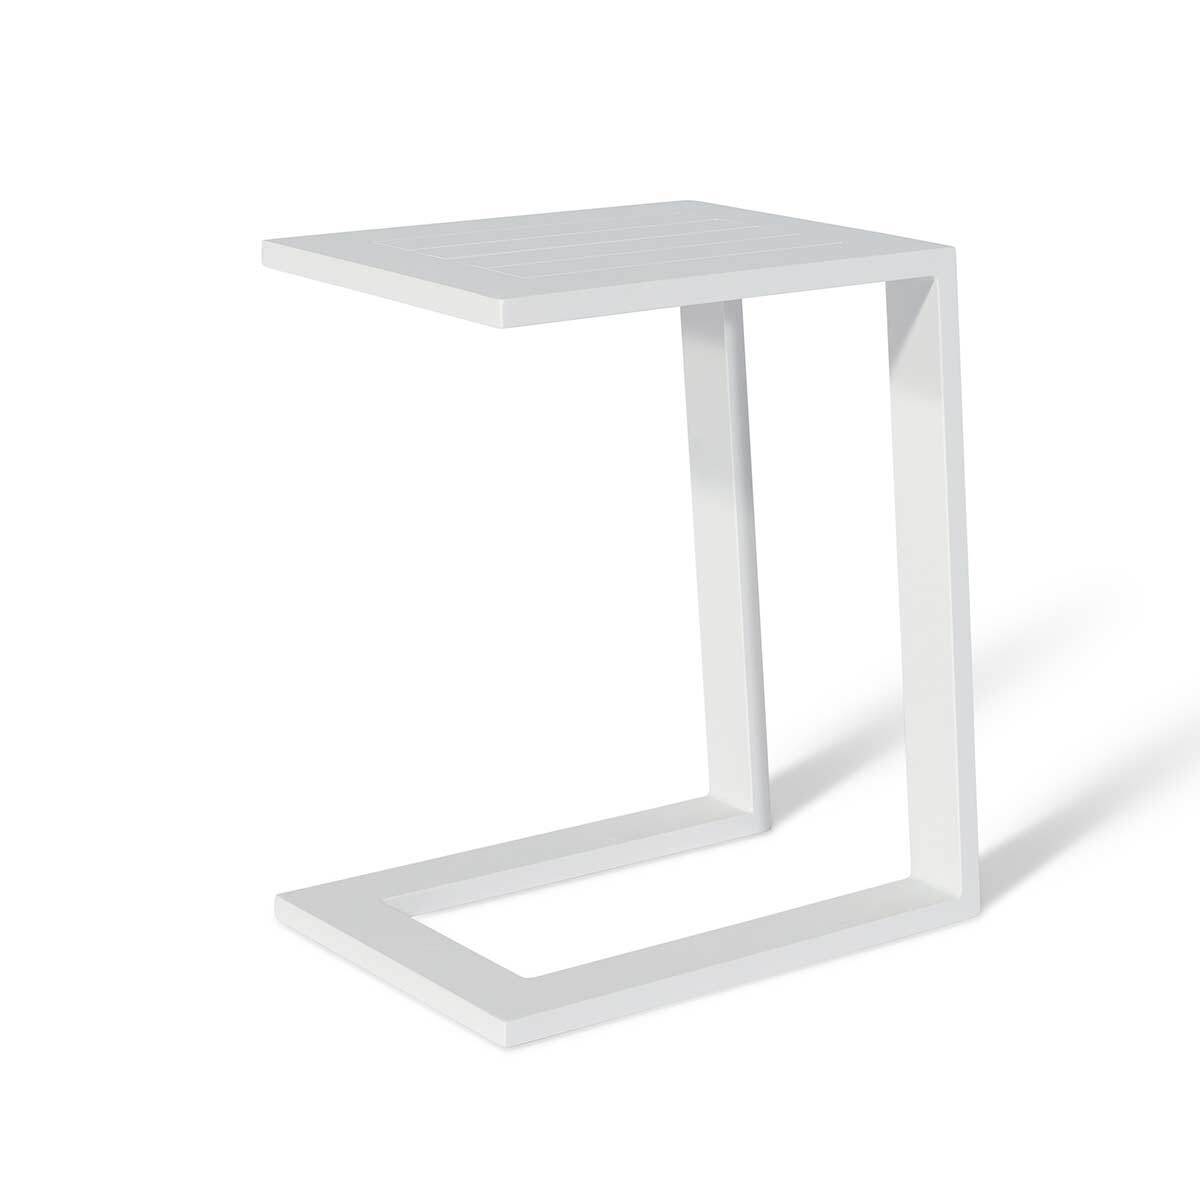 Maze - Outdoor Fabric Aluminium Side Table - White product image